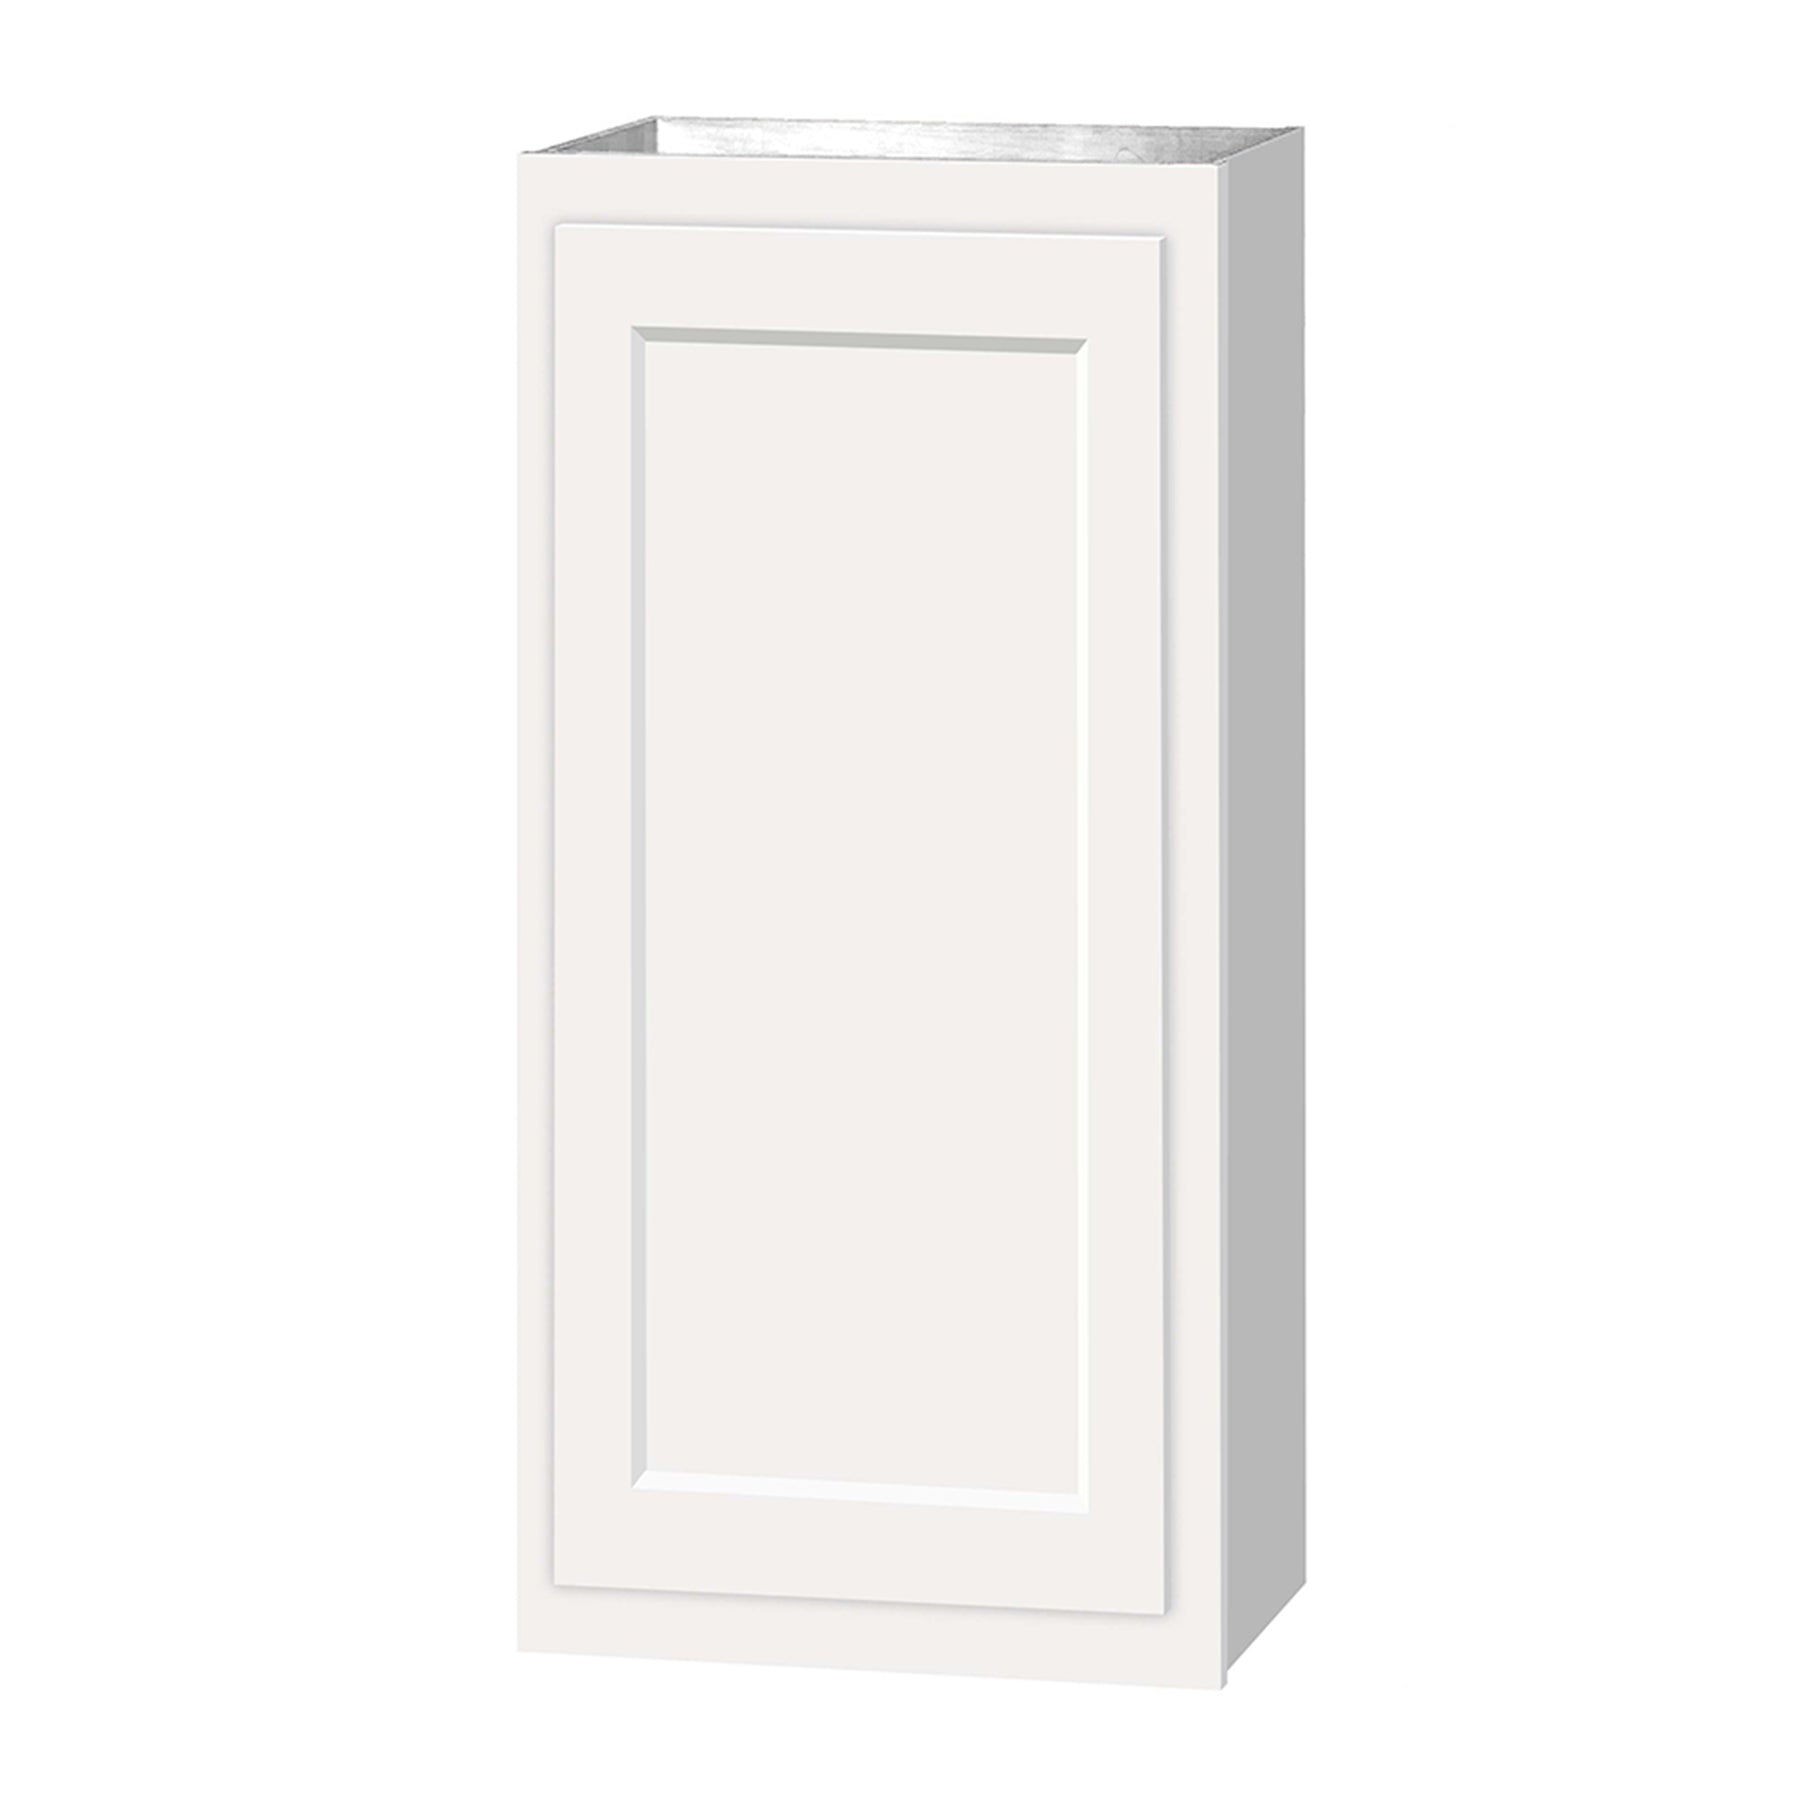 30 inch Wall Cabinets - Single Door - Dwhite Shaker - 15 Inch W x 30 Inch H x 12 Inch D